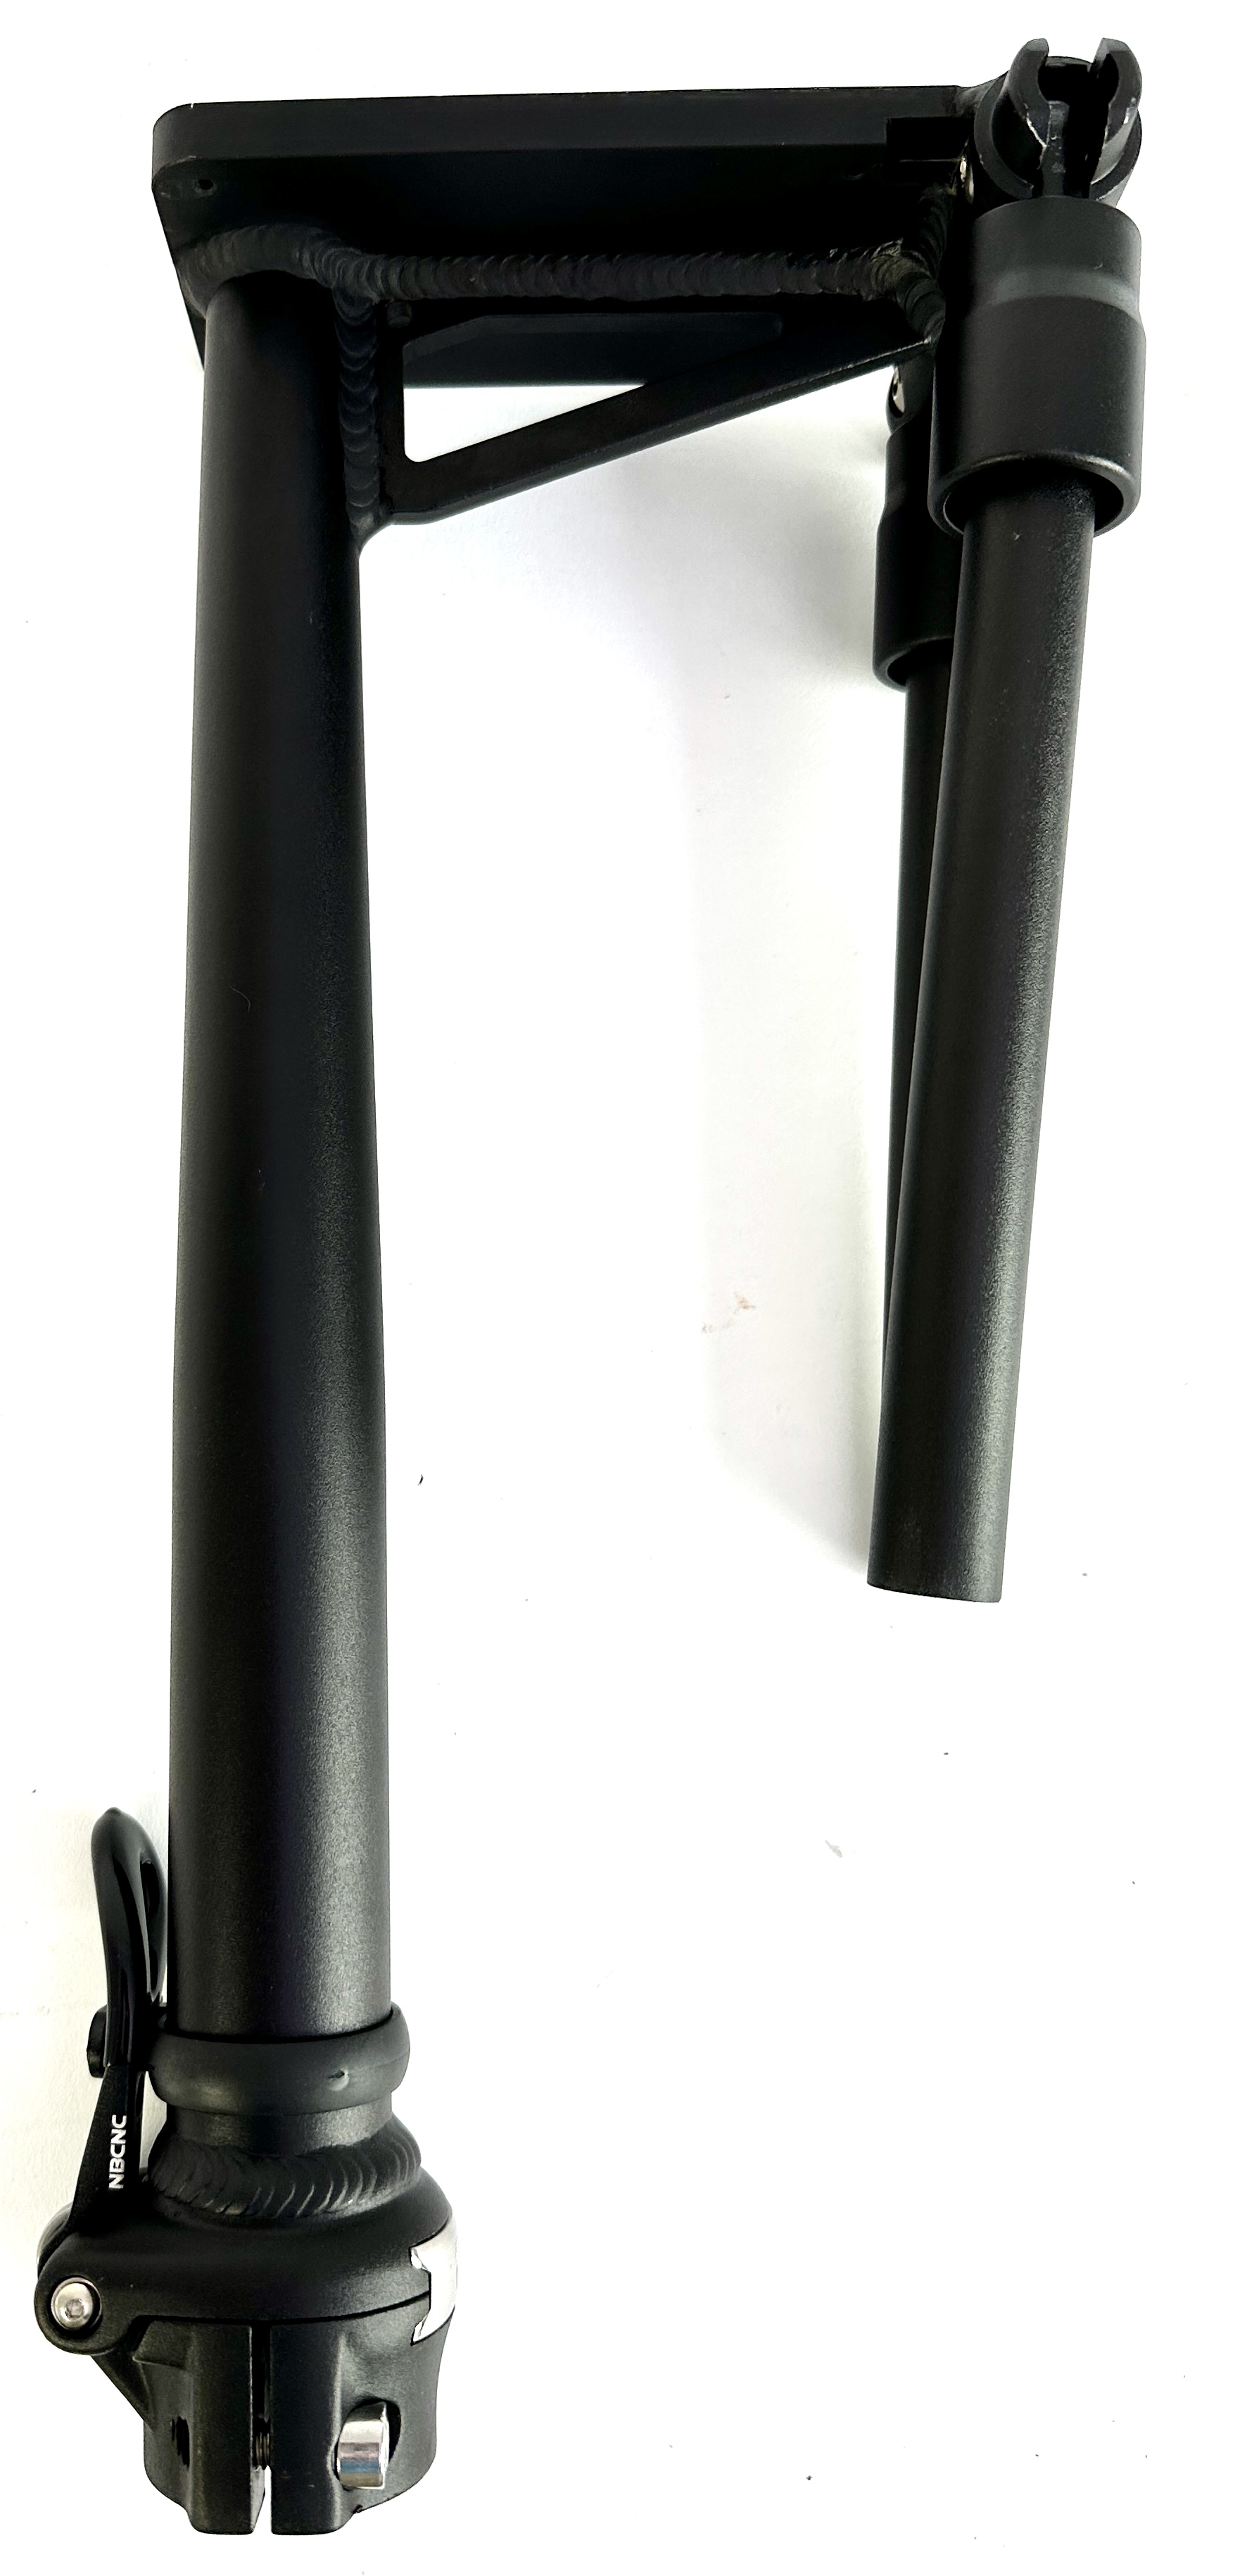 Guidon pliable / guidon rabattable pour vélo pliant noir mat